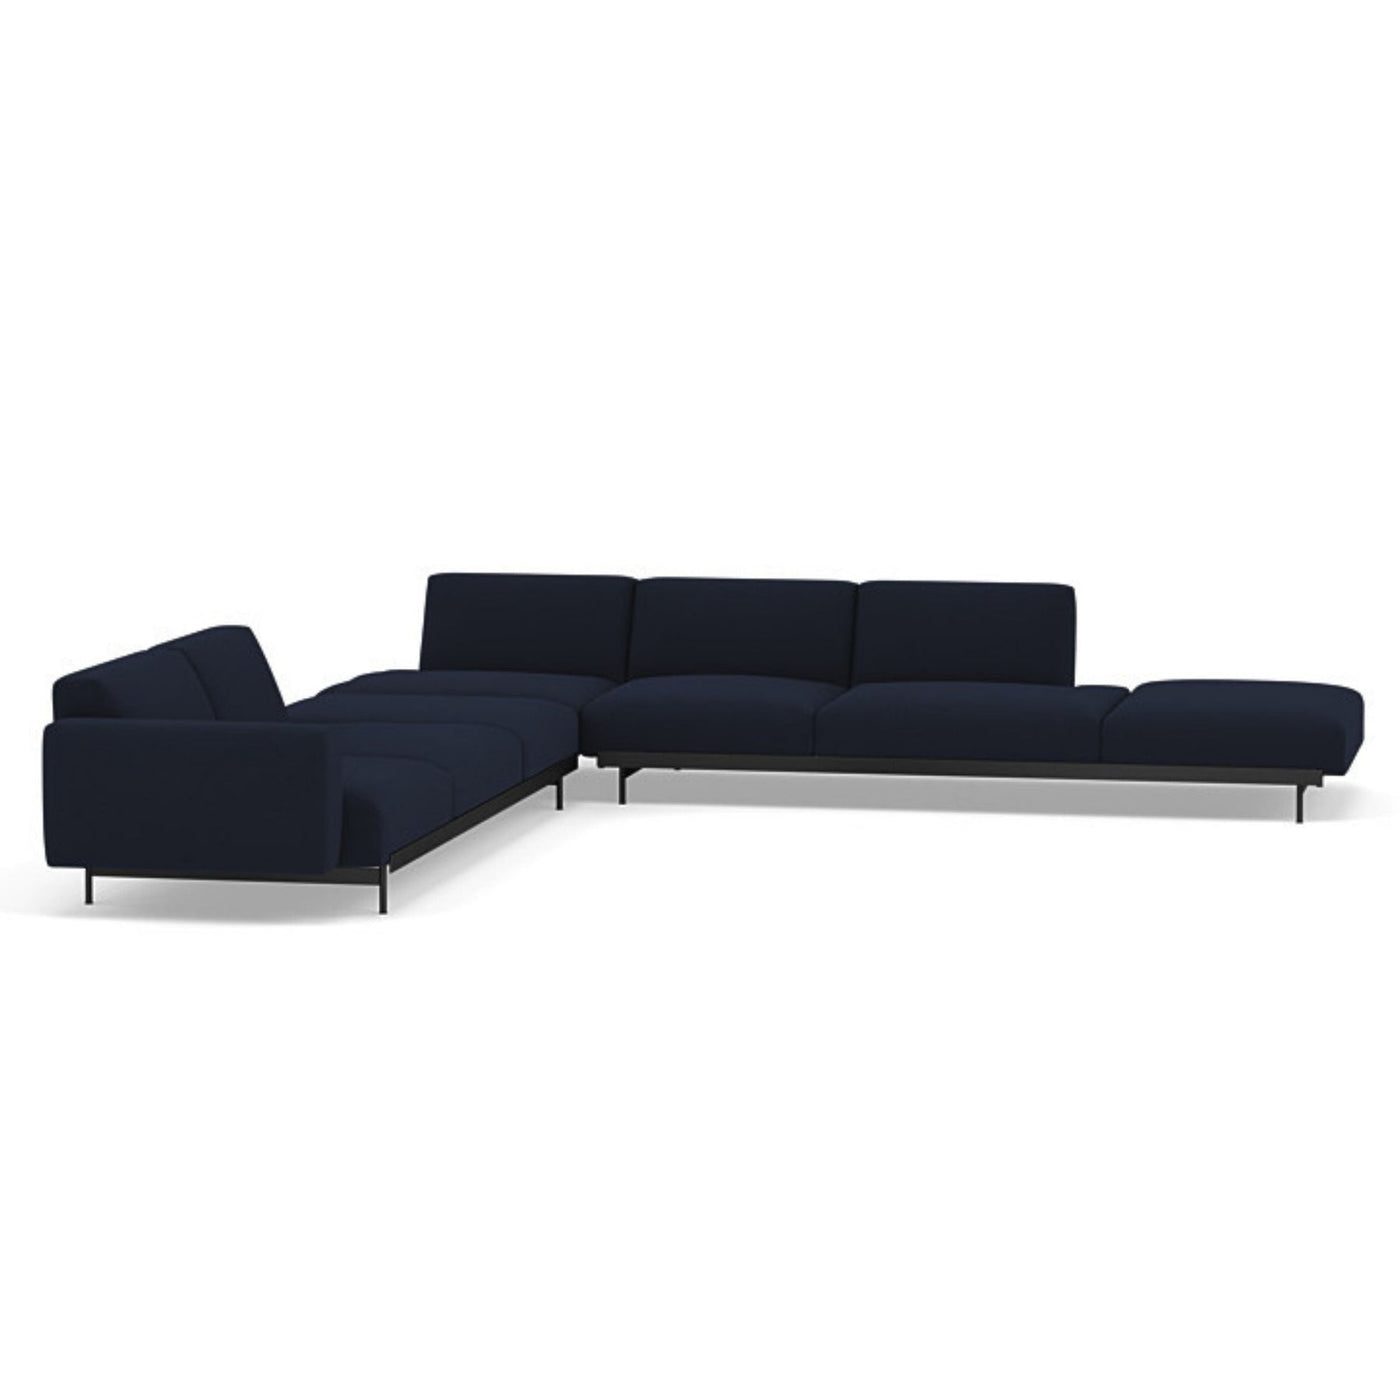 Muuto In Situ corner sofa, configuration 9 in vidar 554 fabric. Made to order from someday designs. #colour_vidar-554